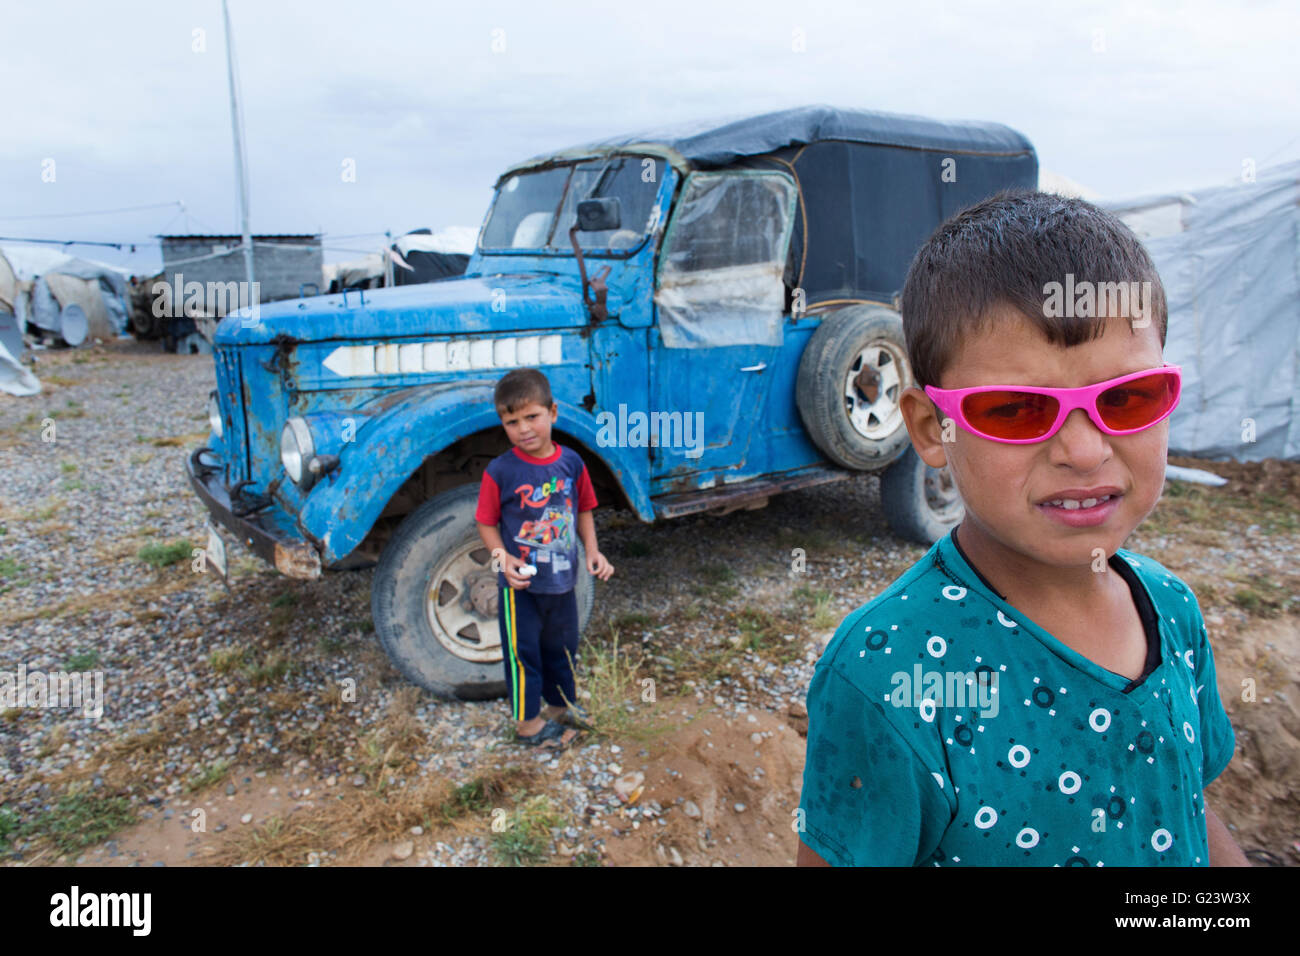 UAZ oldtimer truck in Iraqi refugee camp Stock Photo